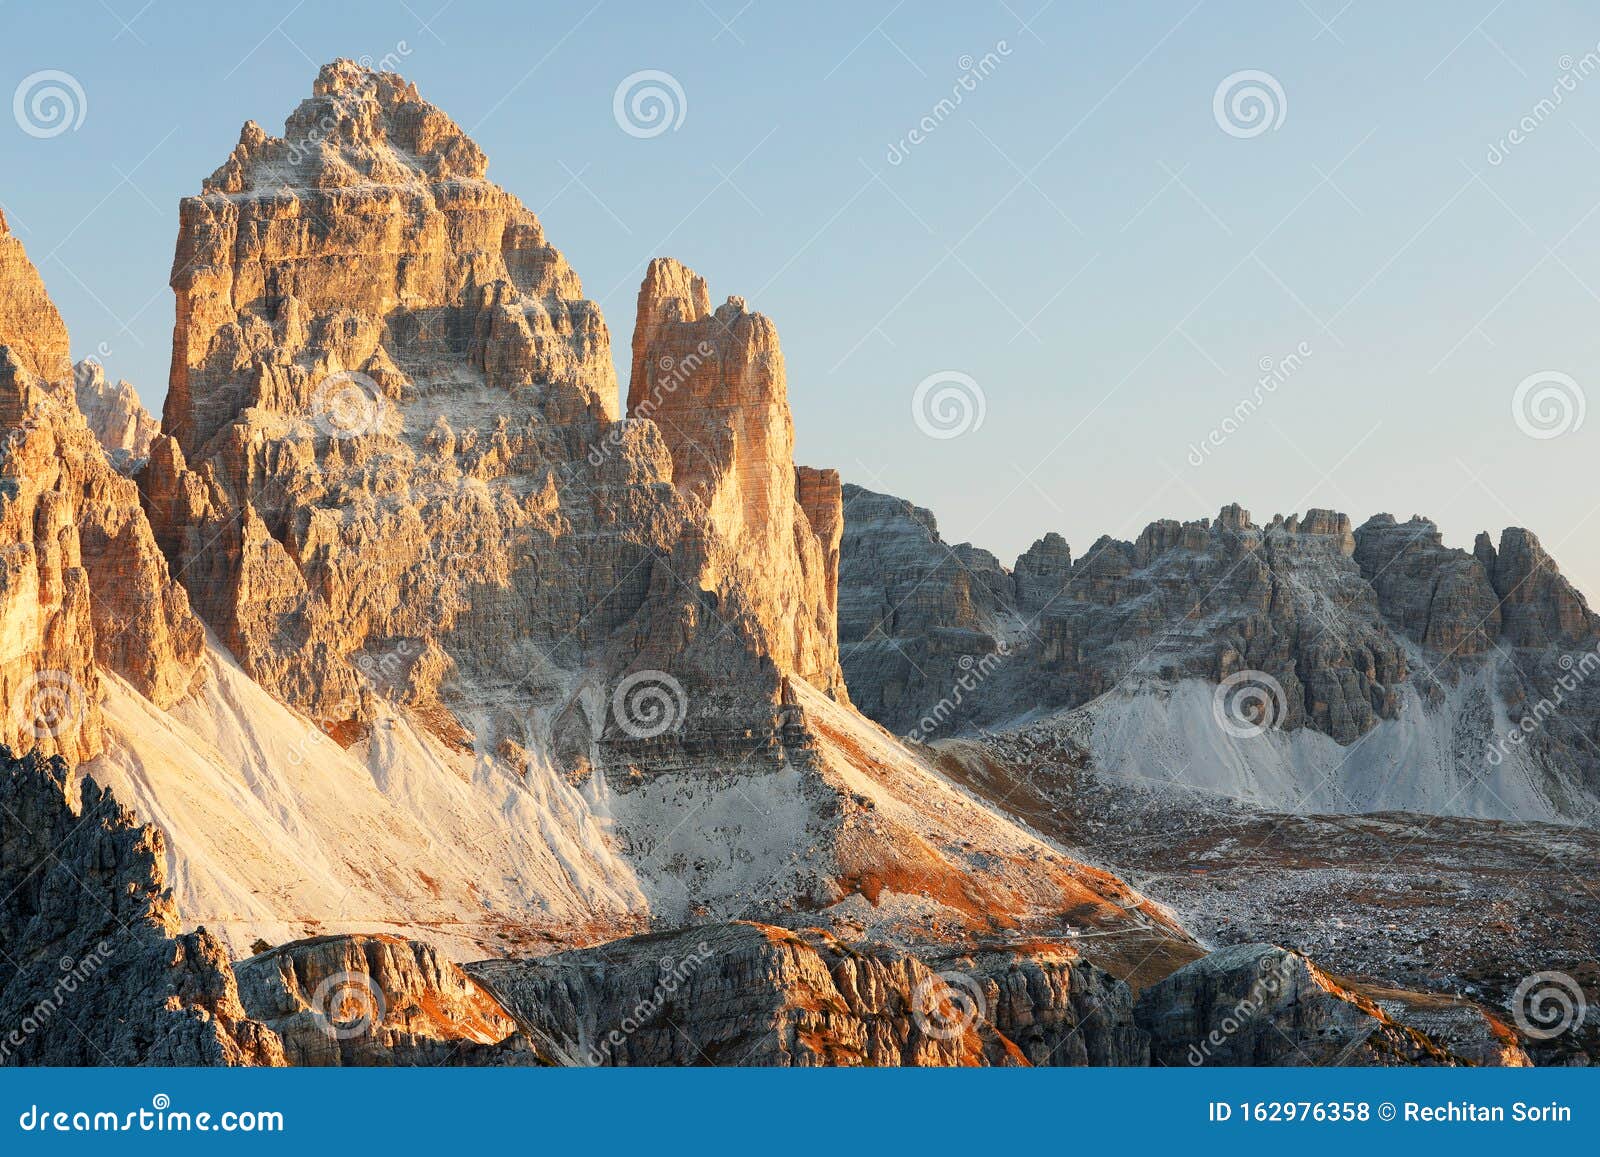 tre cime - three peaks di lavaredo - drei zinnen, are three of the most famous peaks of the dolomites, in the sesto dolomites.